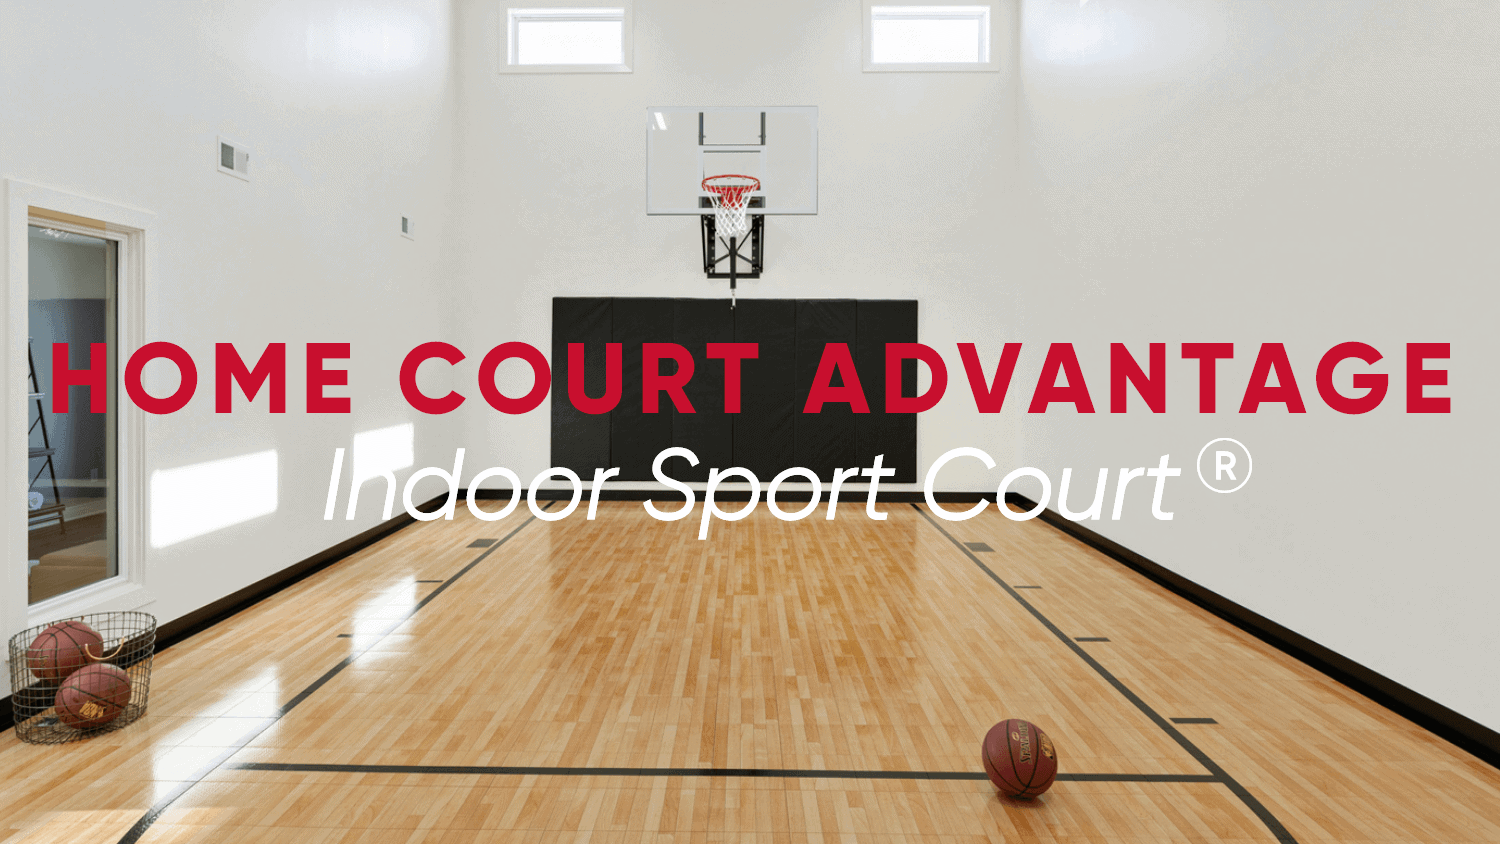 Indoor Sport Court, Laminate Flooring Basketball Court